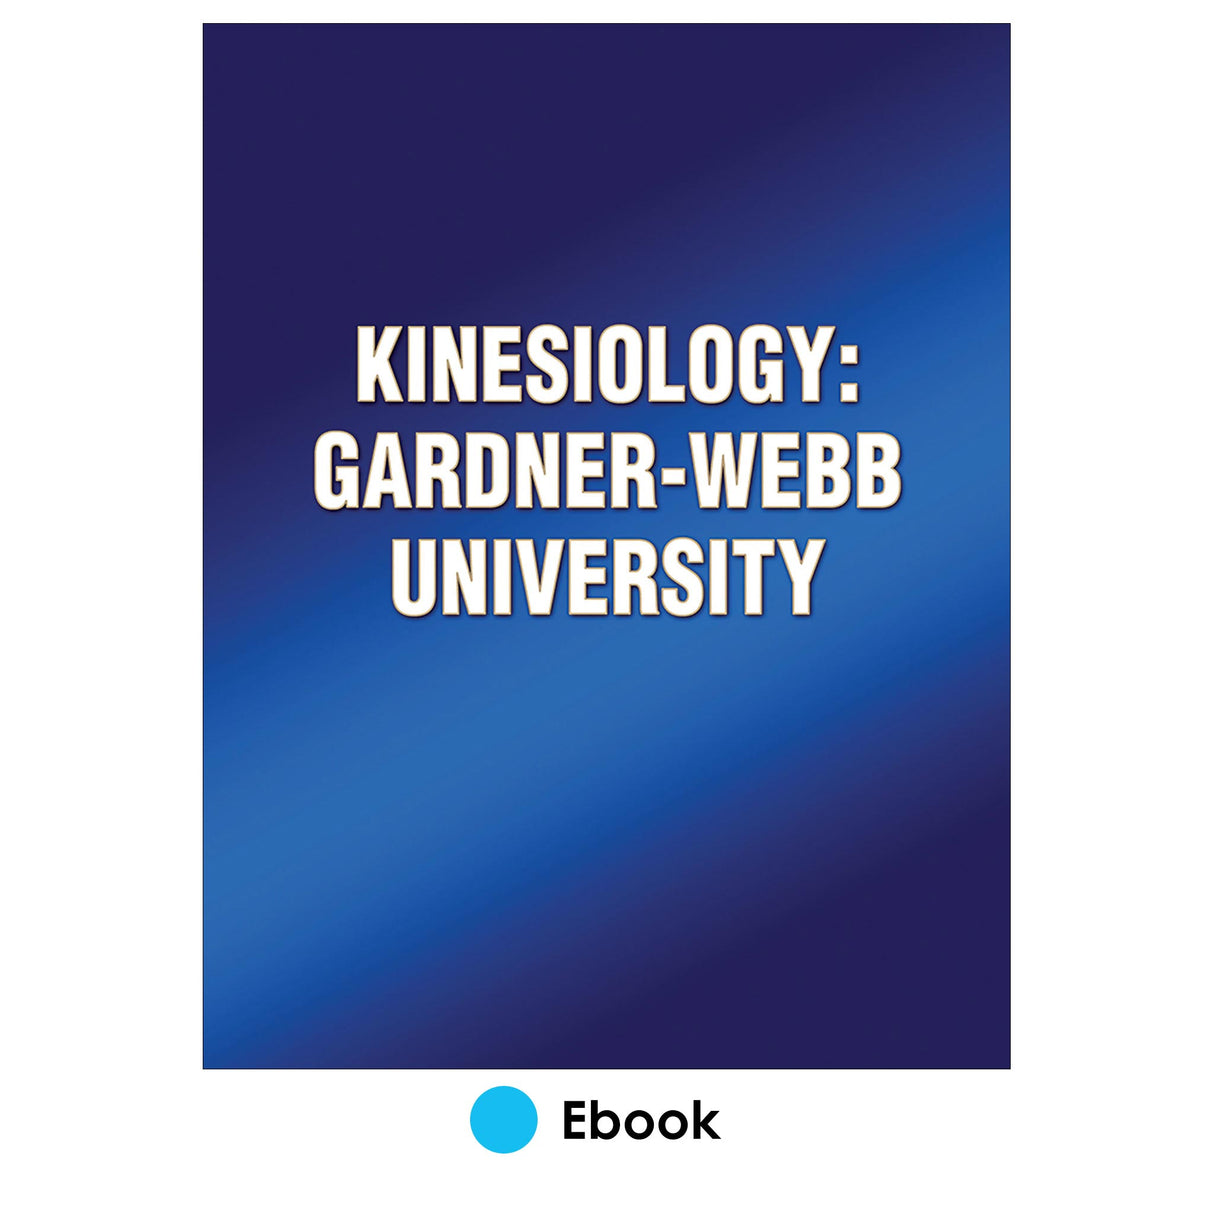 Kinesiology: Gardner-Webb University